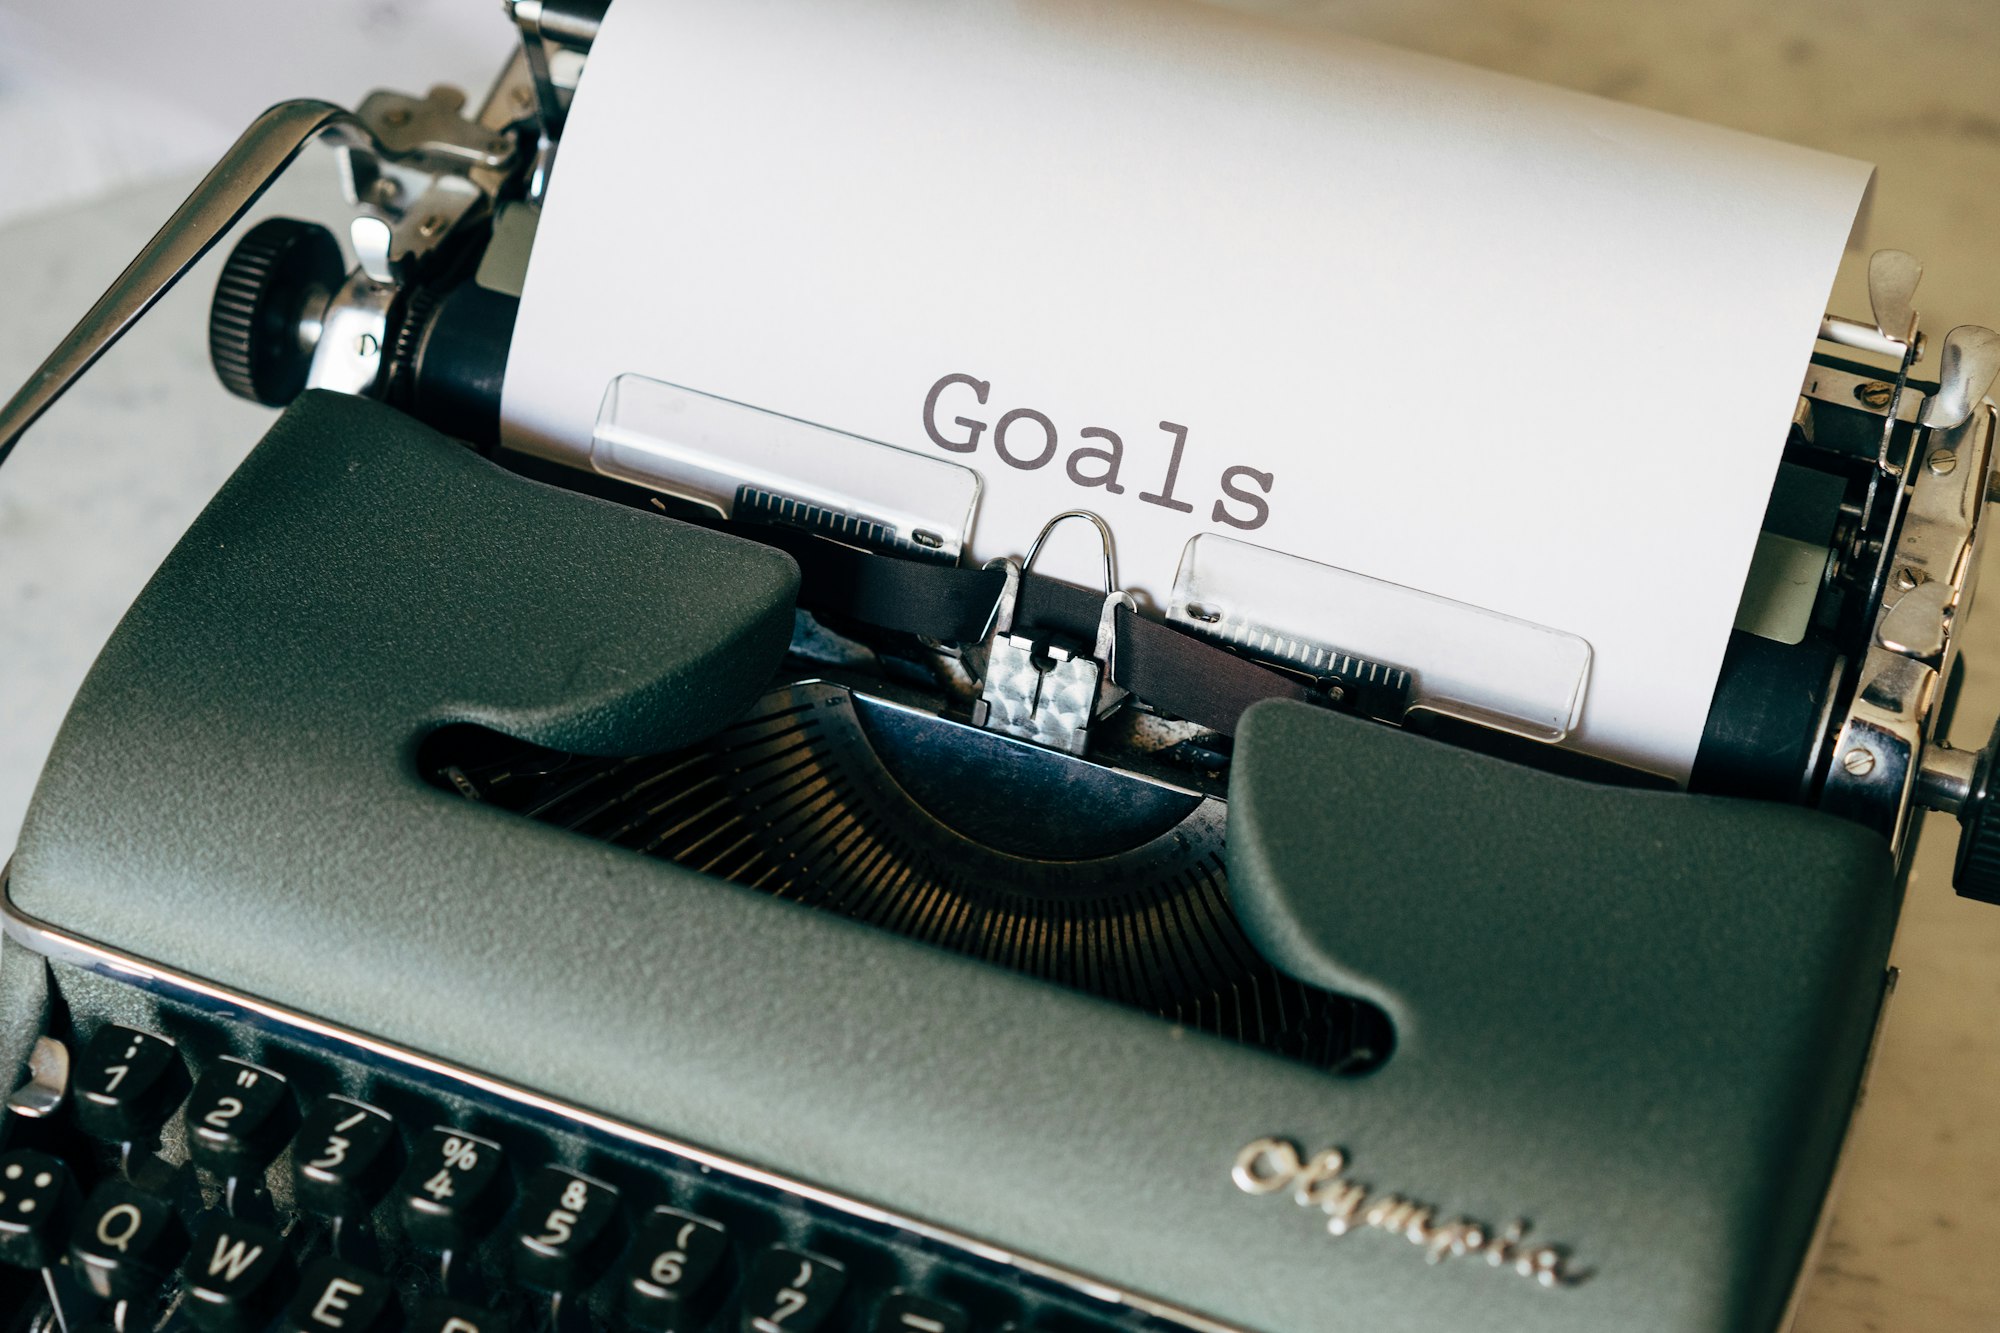 "Goals" written with an old typewriter